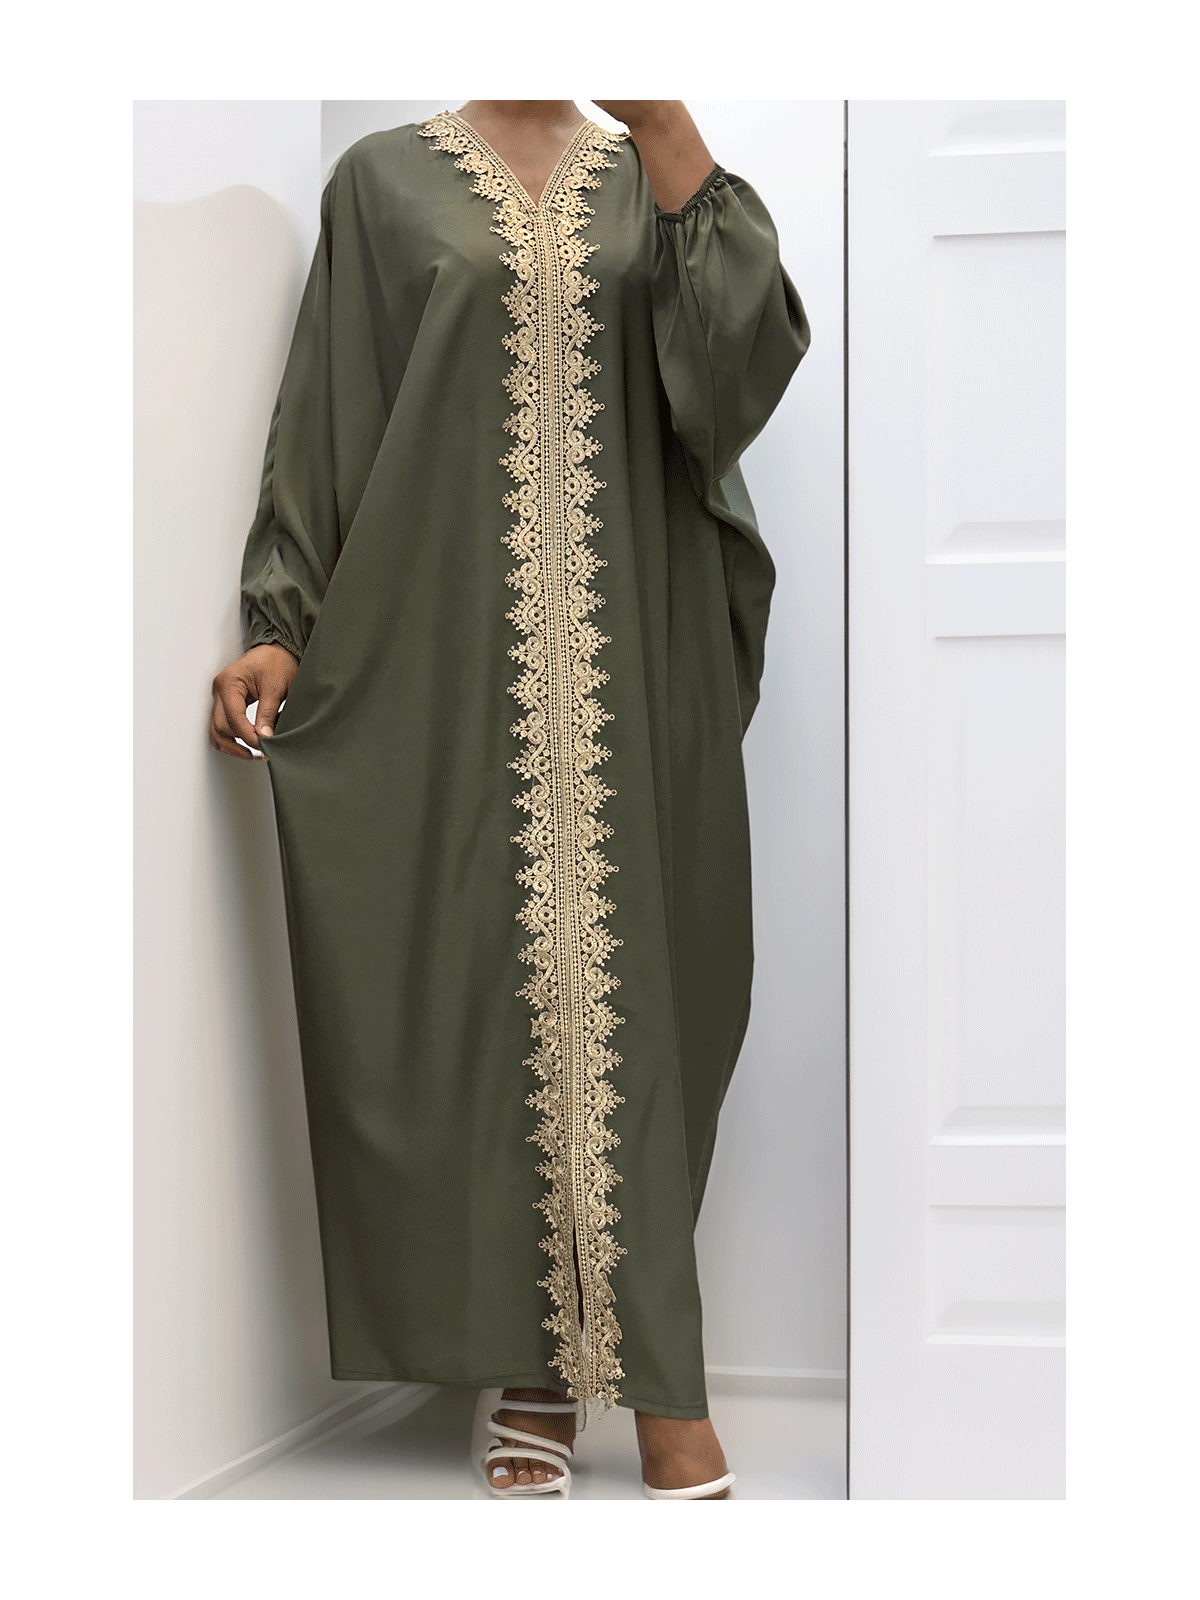 Longue abaya kaki over size avec une jolie dentelle  - 3